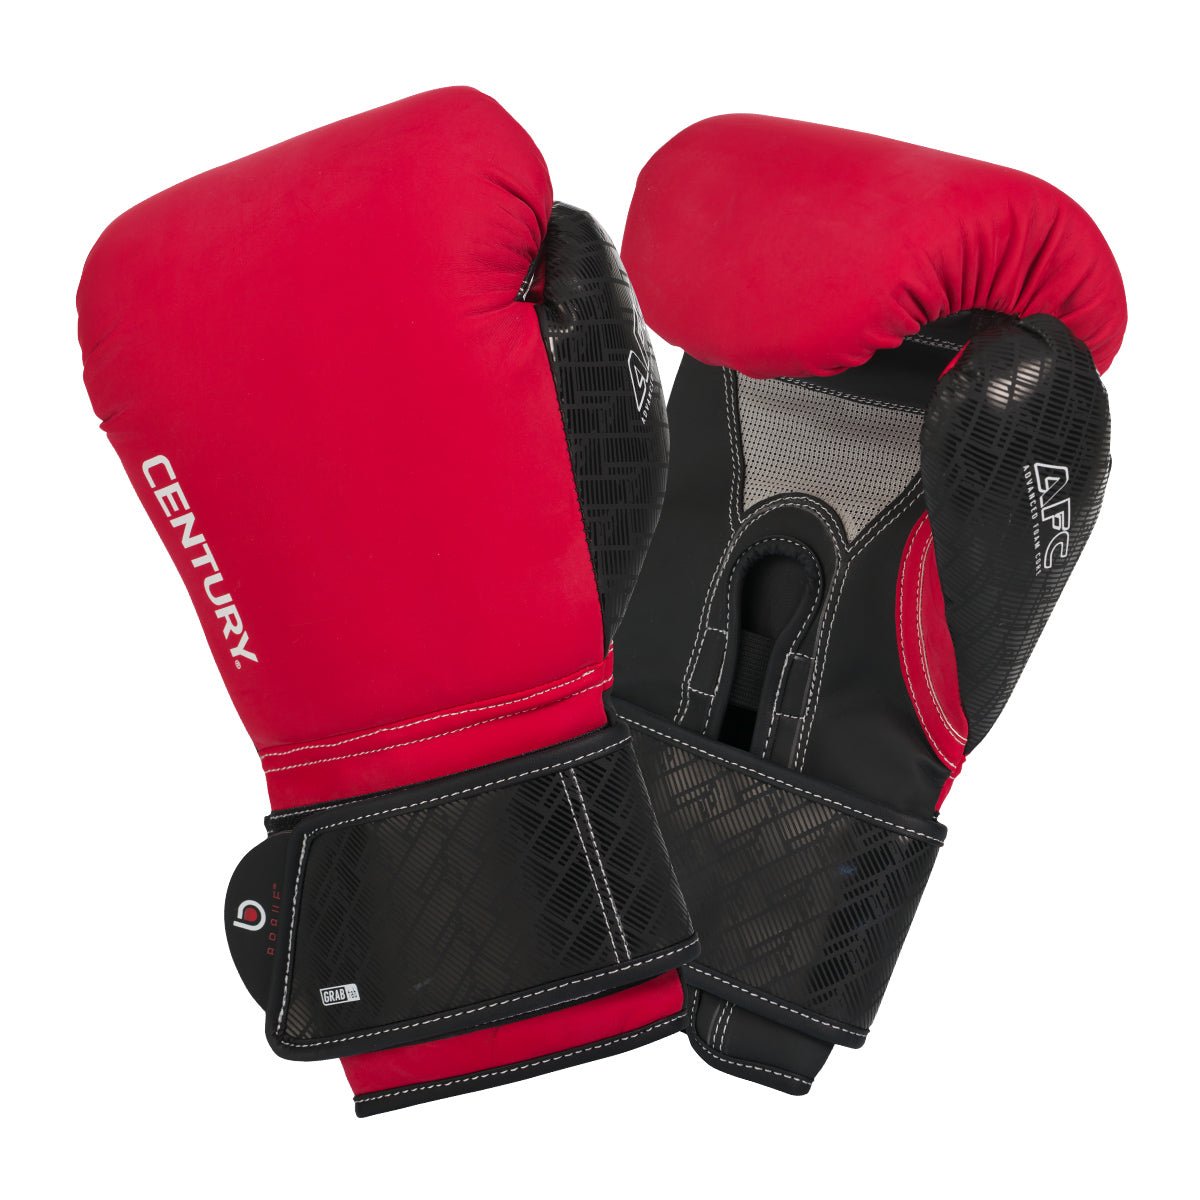 Brave Boxing Gloves - Red/Black Red/Black